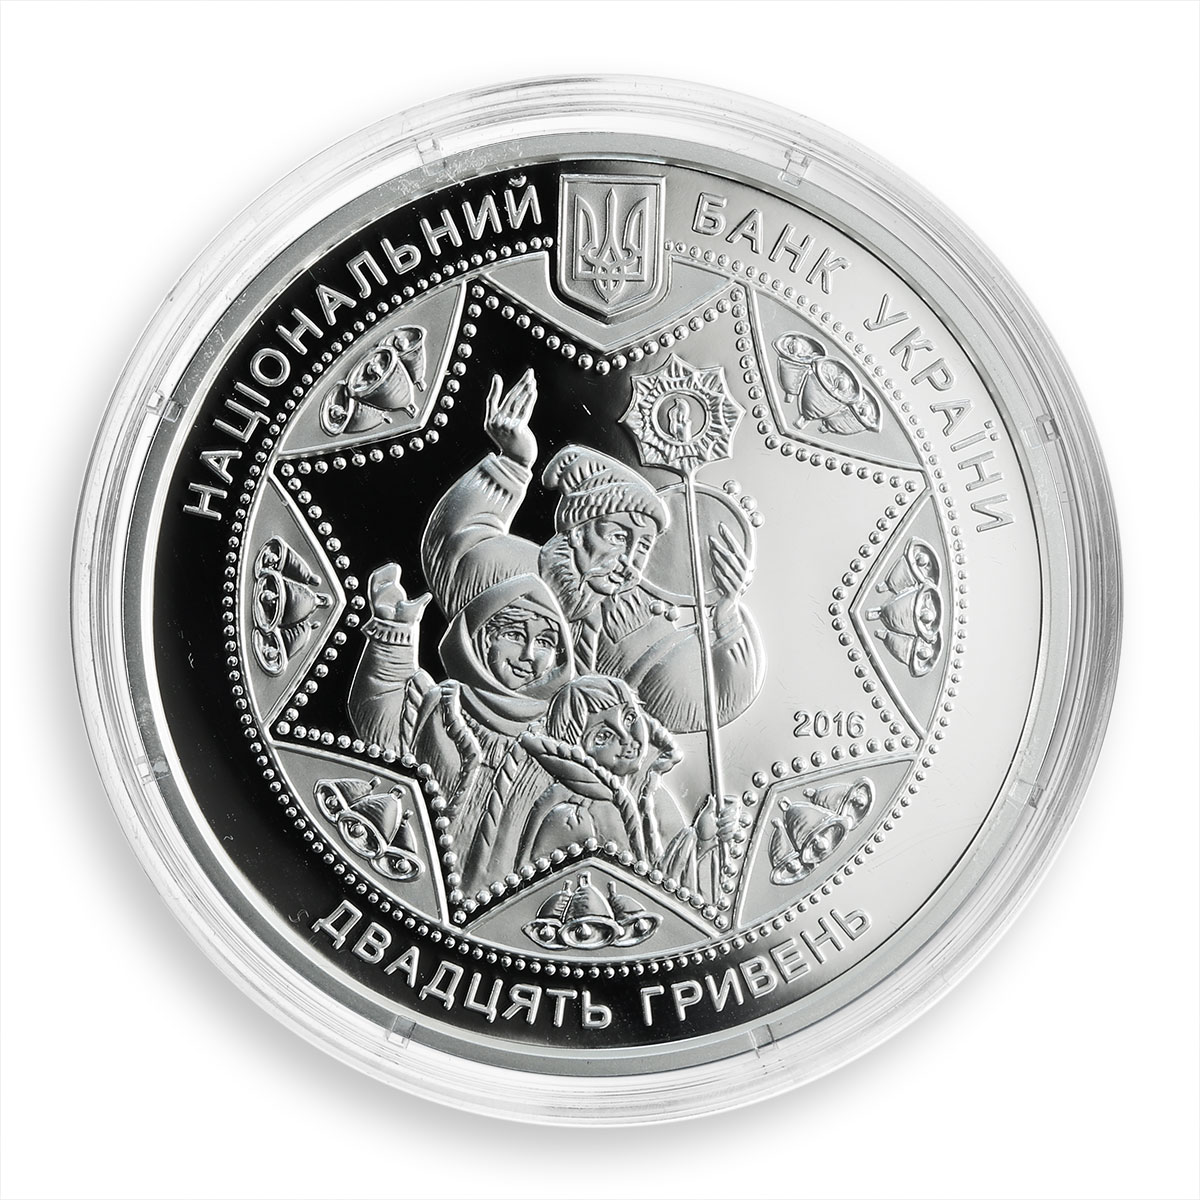 Ukraine 20 hryvnia Shchedryk Carol Mykola Leontovych Christmas silver coin 2016